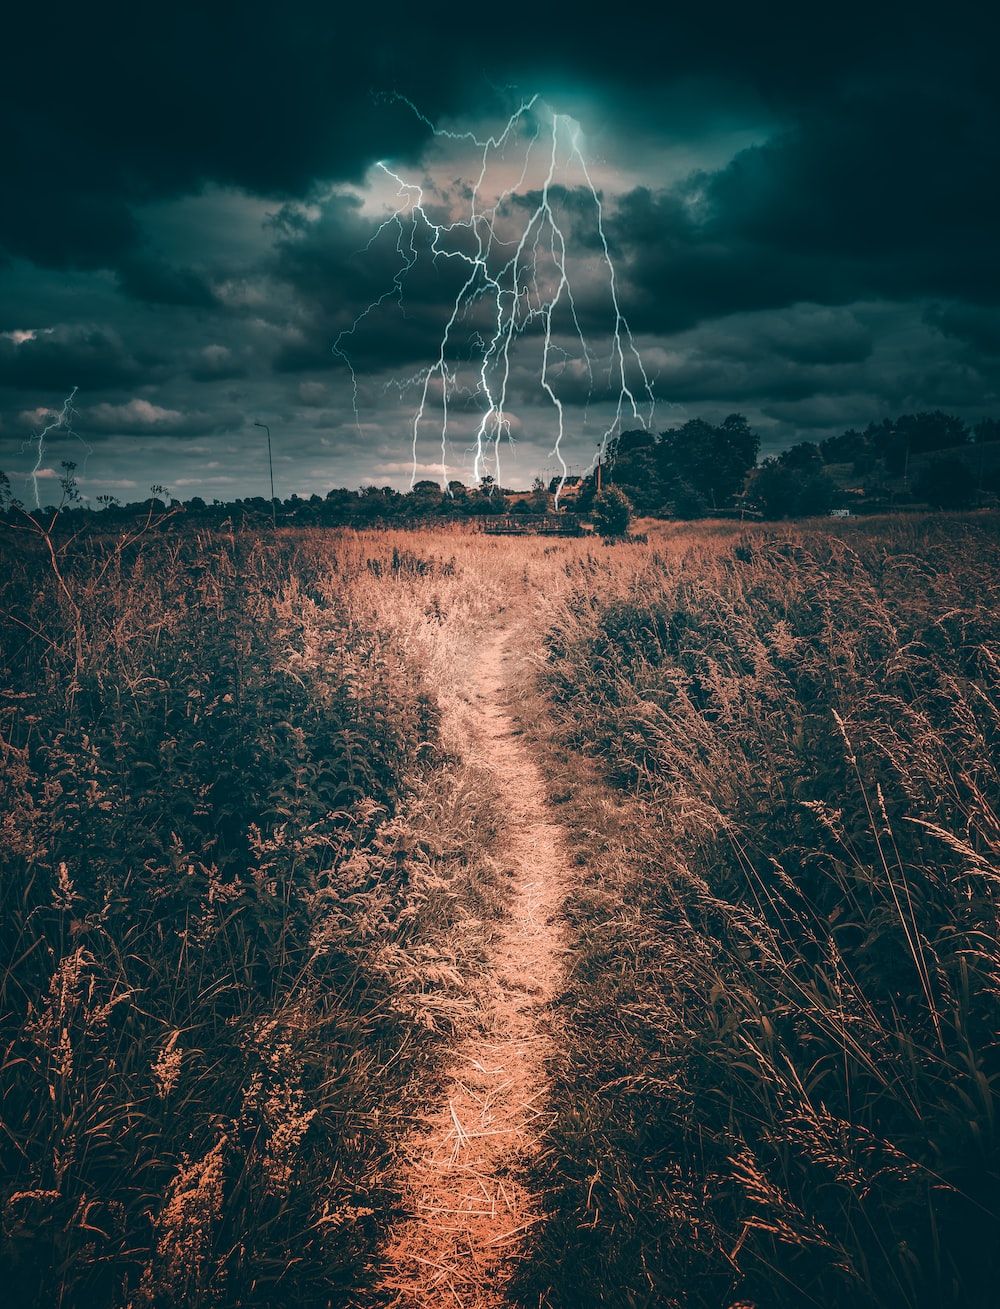 Lightning over a field - Storm